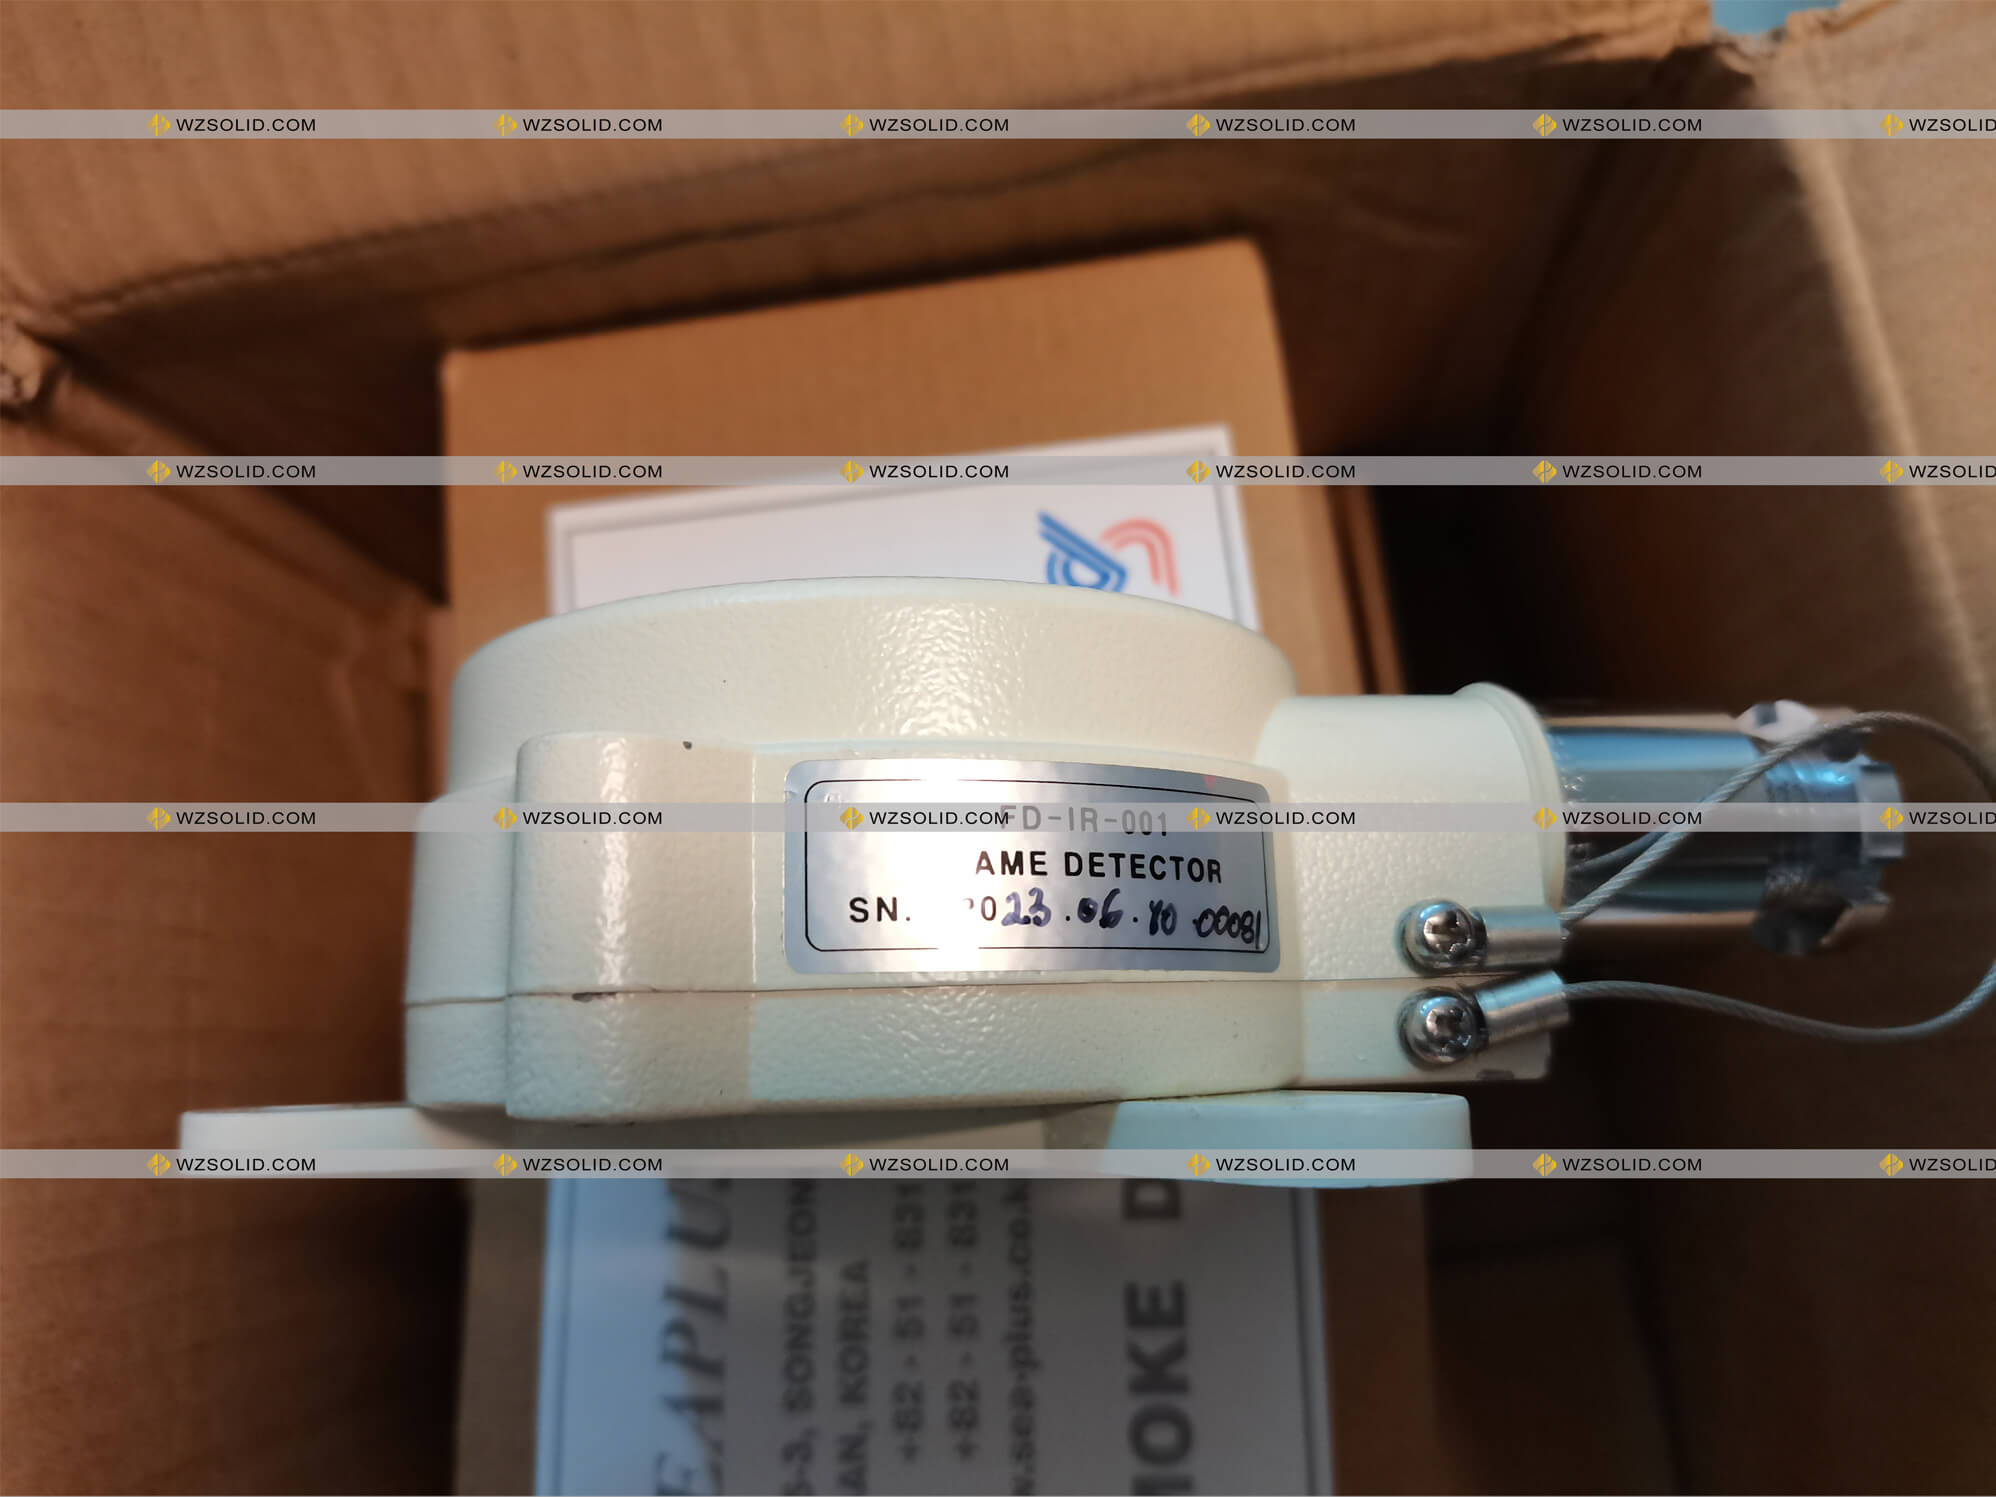 FD-IR-001 Flame Detector from Mnf. Seaplus Co. Ltd.